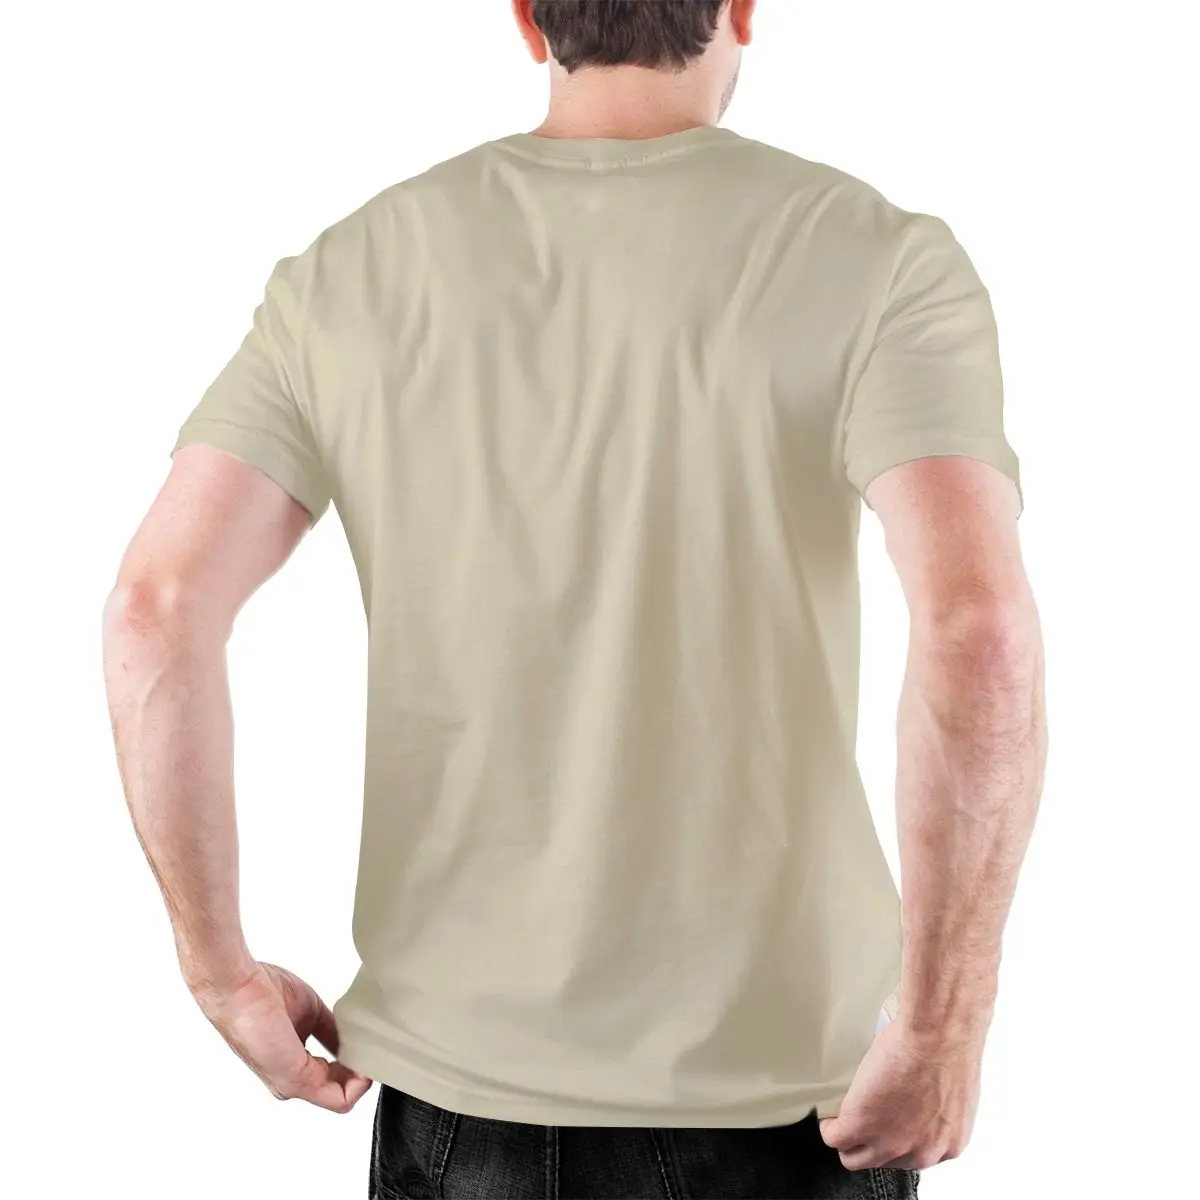 Astro Boy T Shirt Men Pure Cotton Vintage T-Shirt O Neck AstroBoy Anime Tee Shirt Short Sleeve Tops Big Size